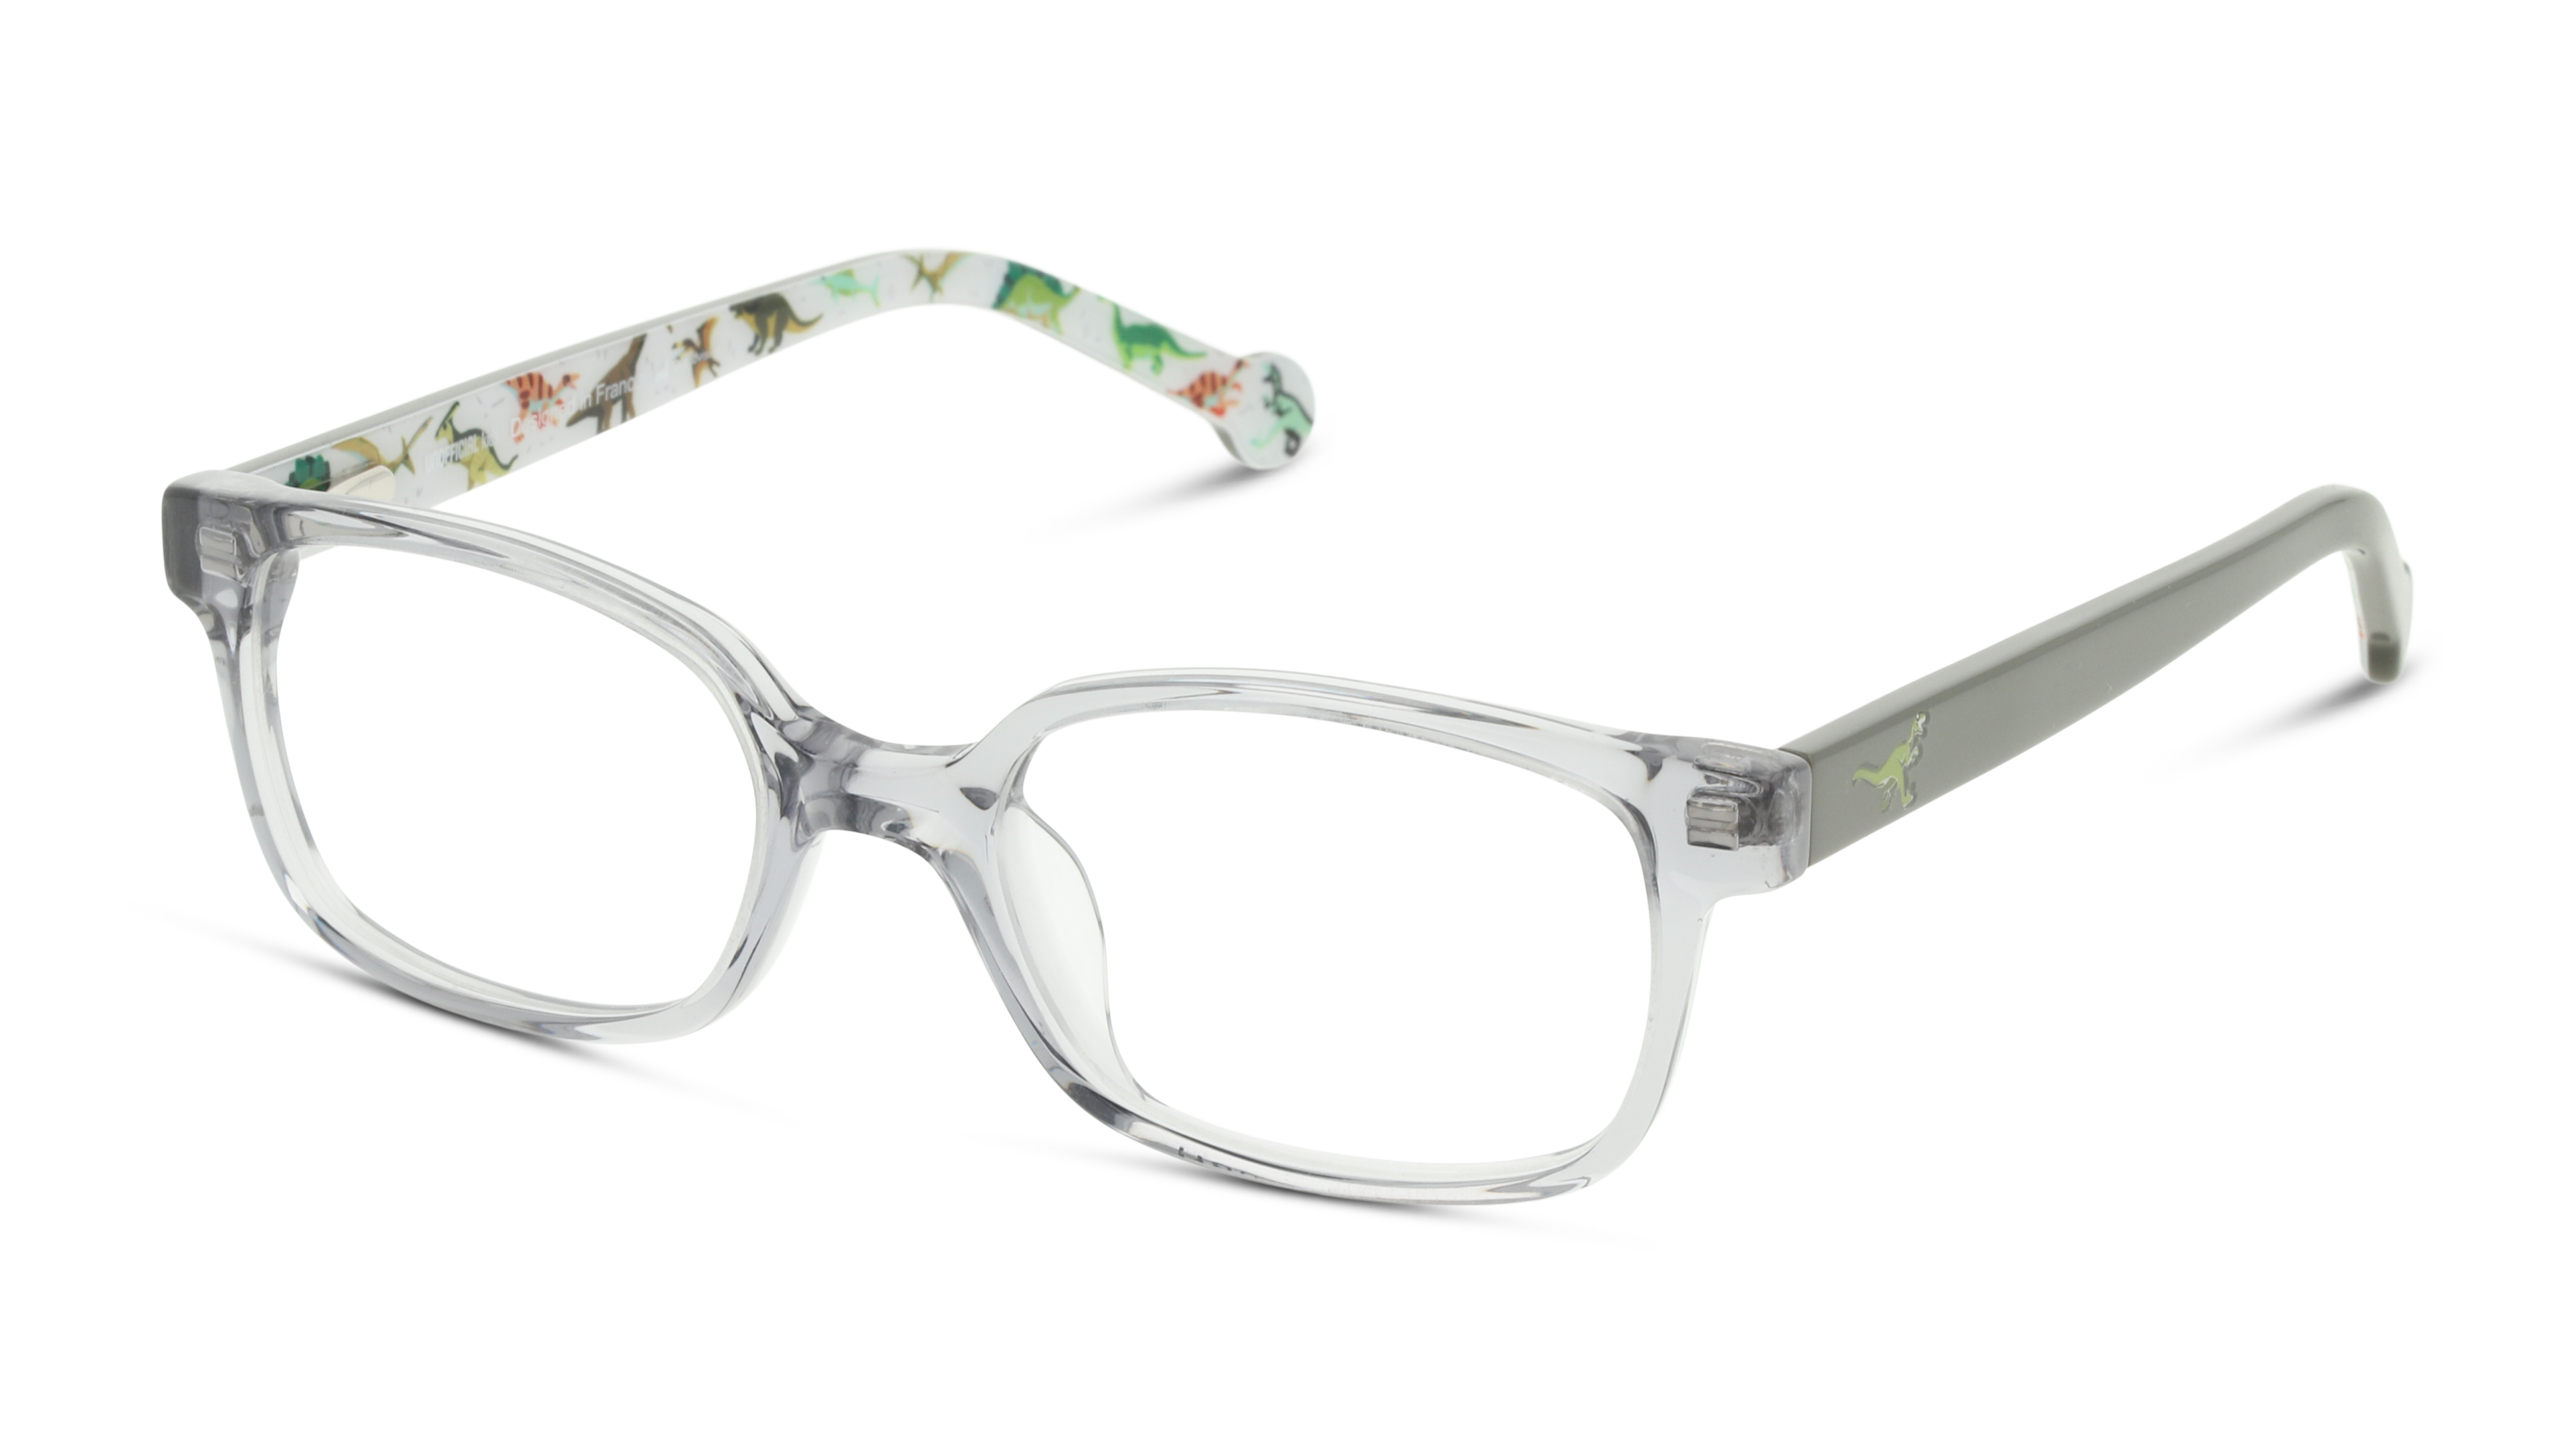 Angle_Left01 Unofficial UN OK0066 (GE00) Children's Glasses Transparent / Grey